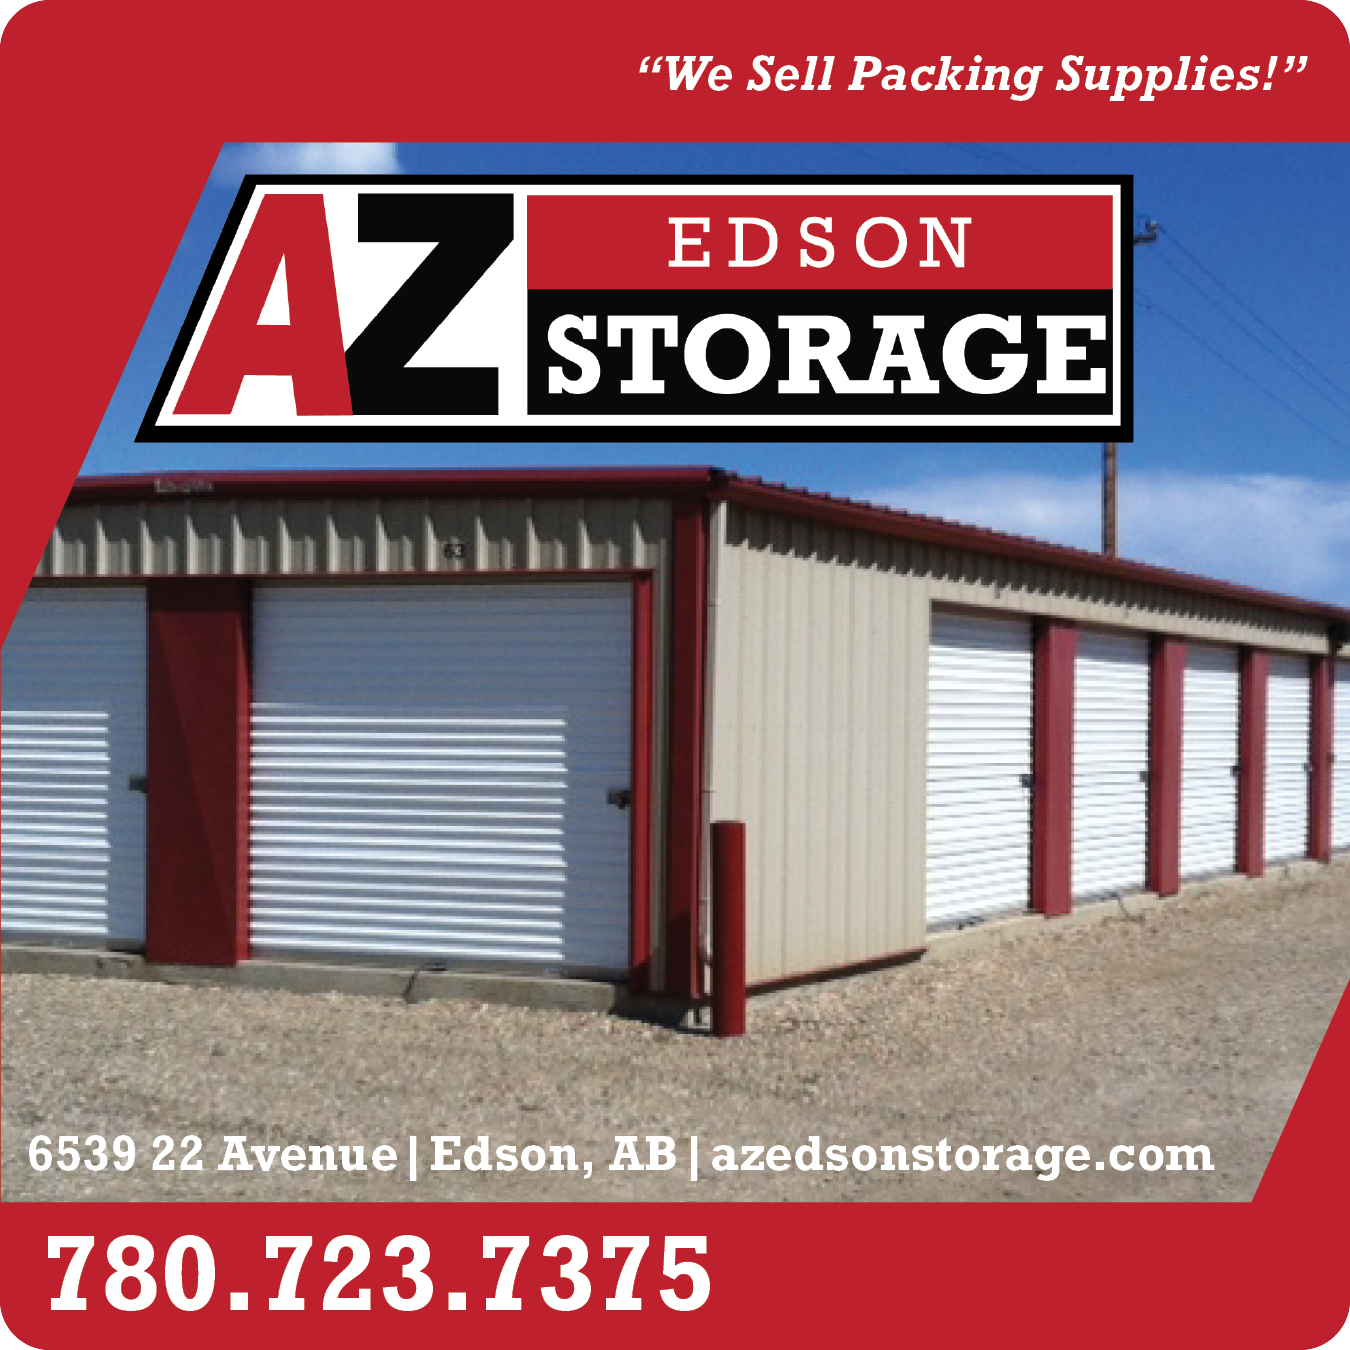 AZ Edson Storage